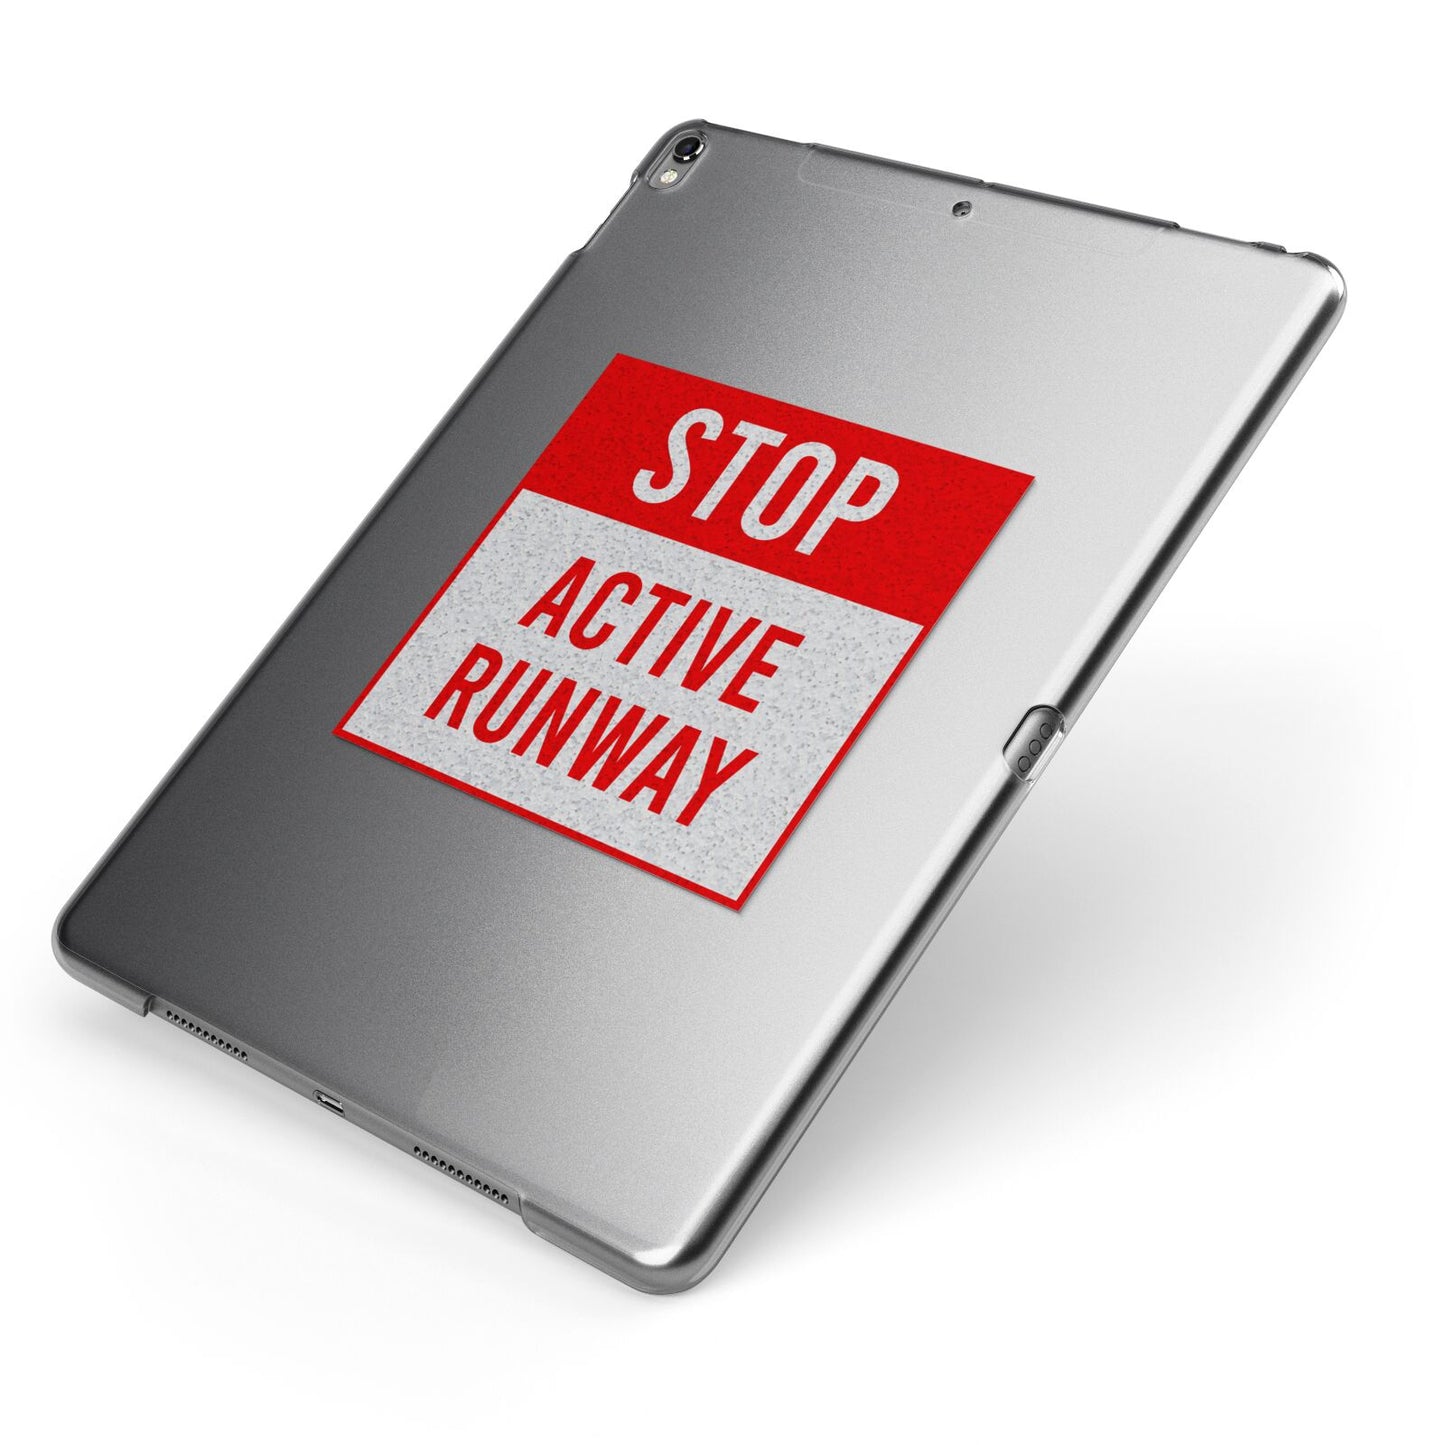 Stop Active Runway Apple iPad Case on Grey iPad Side View